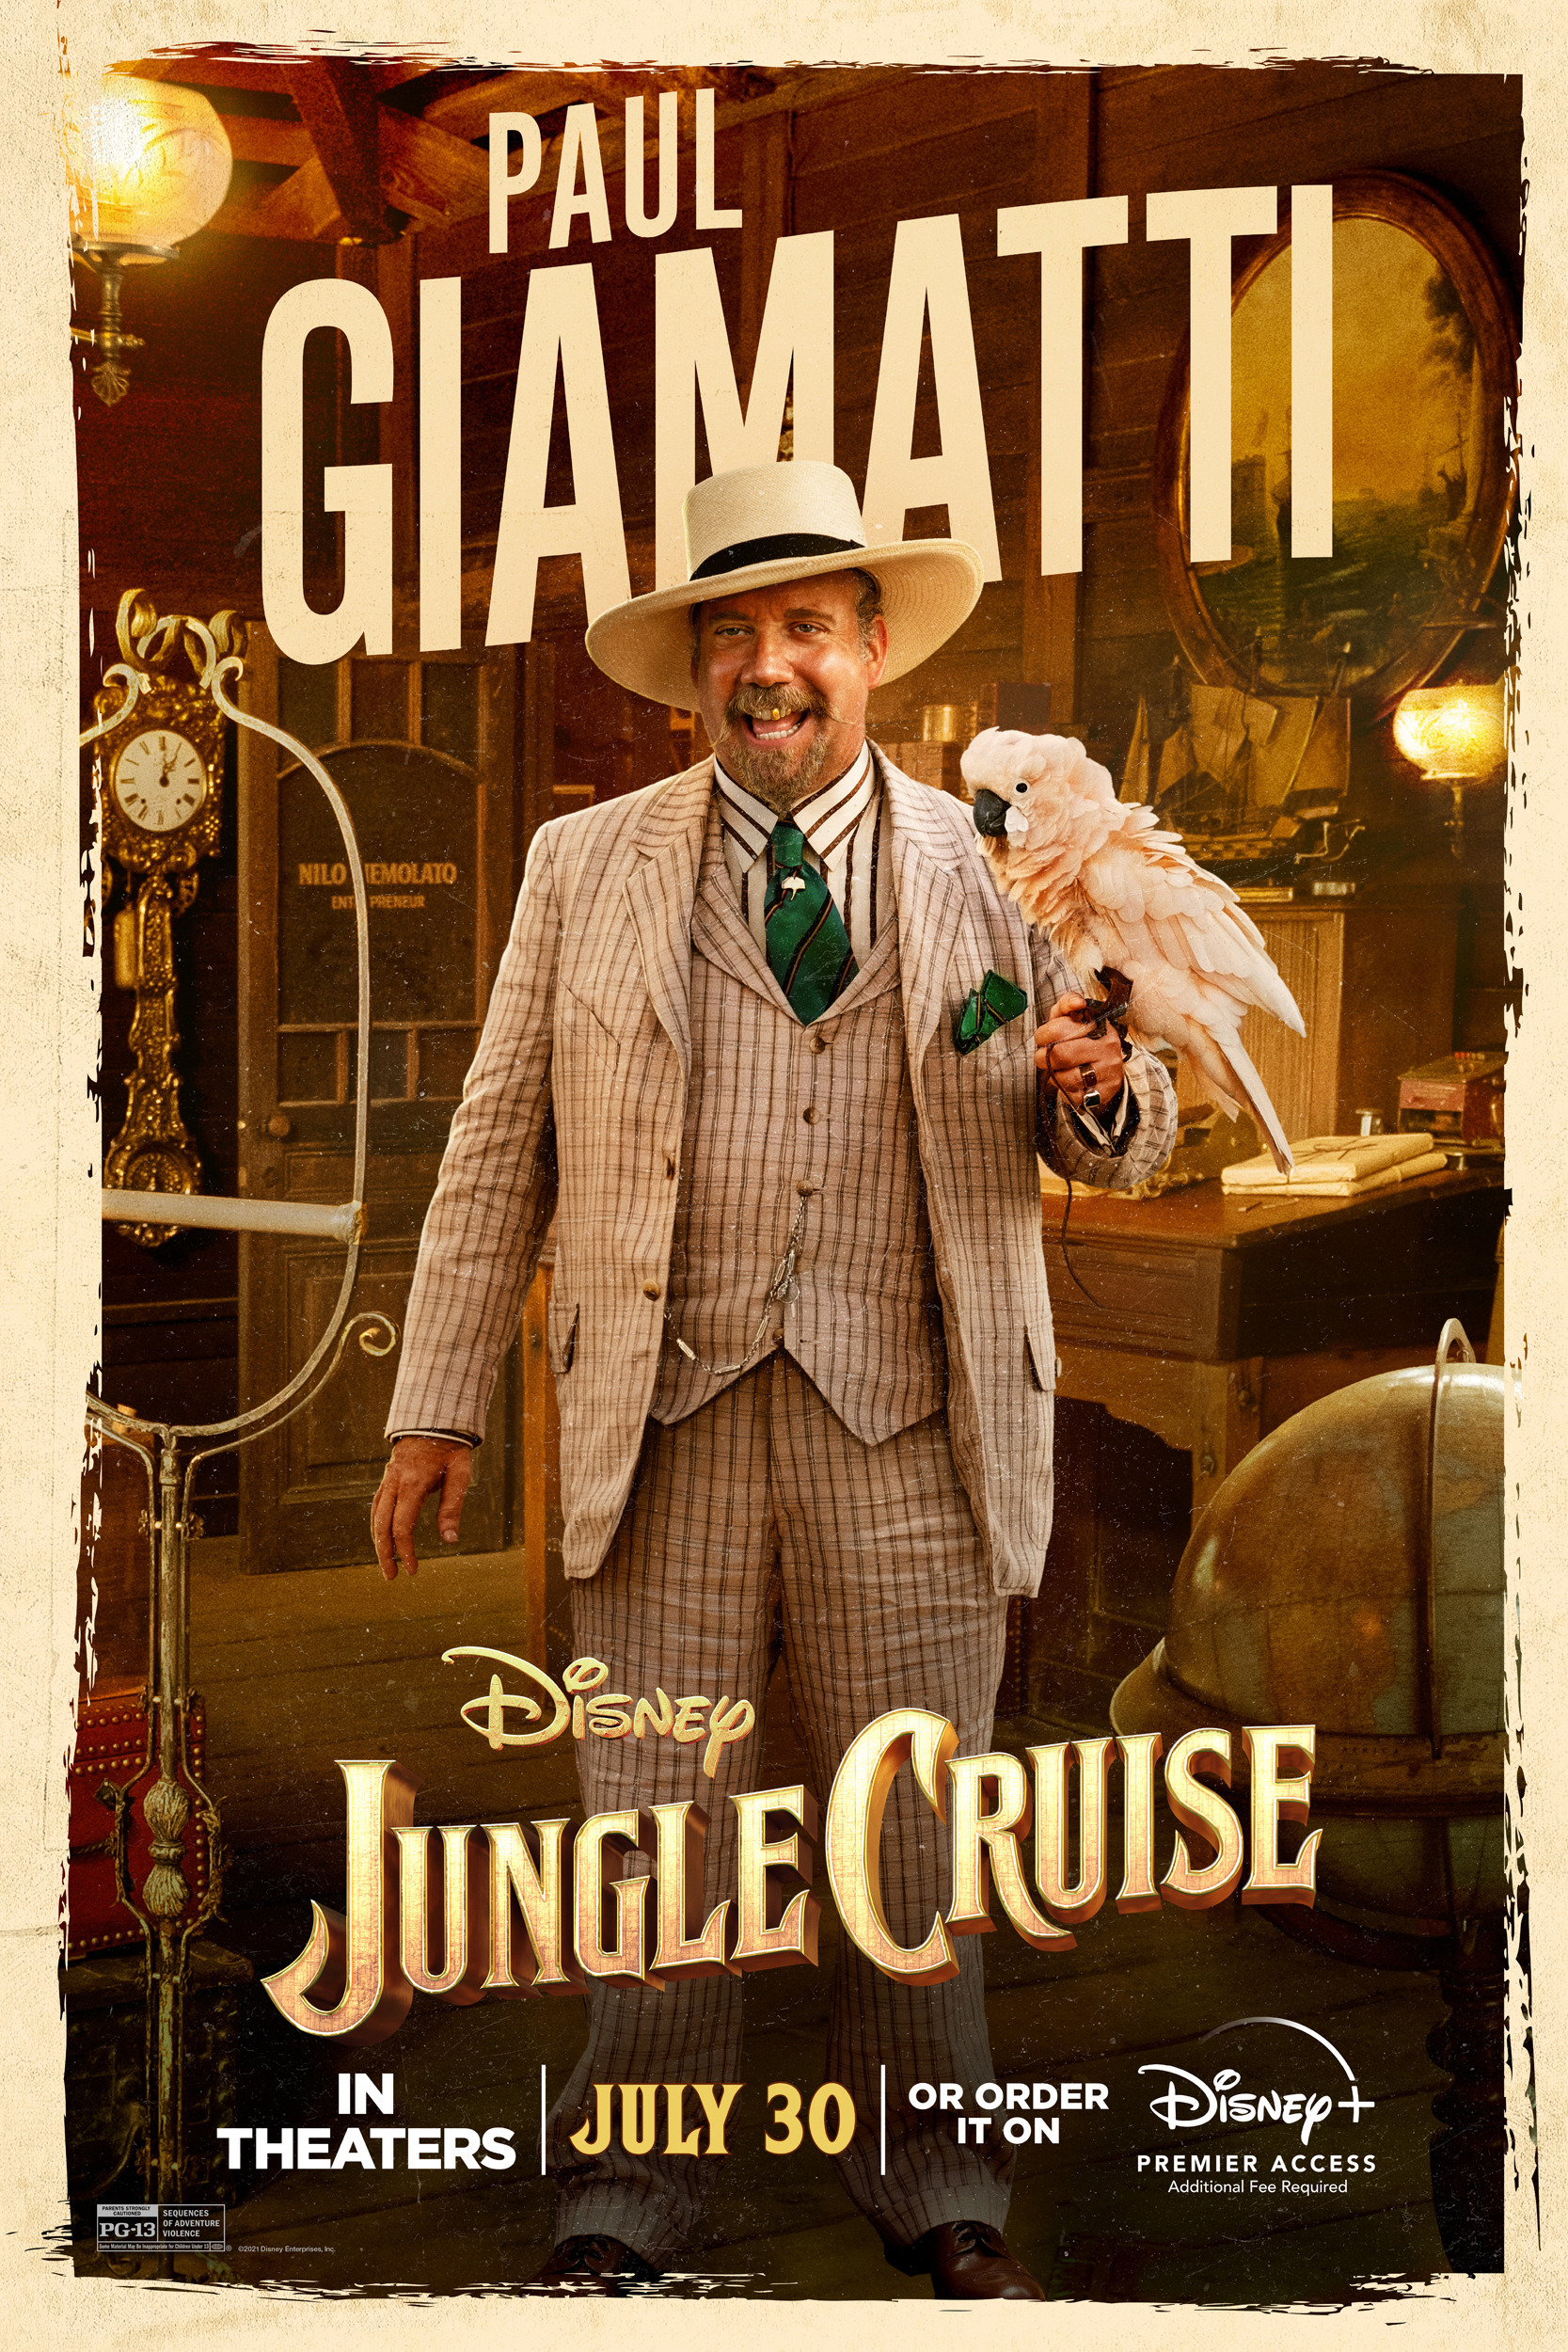 Mega Sized Movie Poster Image for Jungle Cruise (#11 of 26)